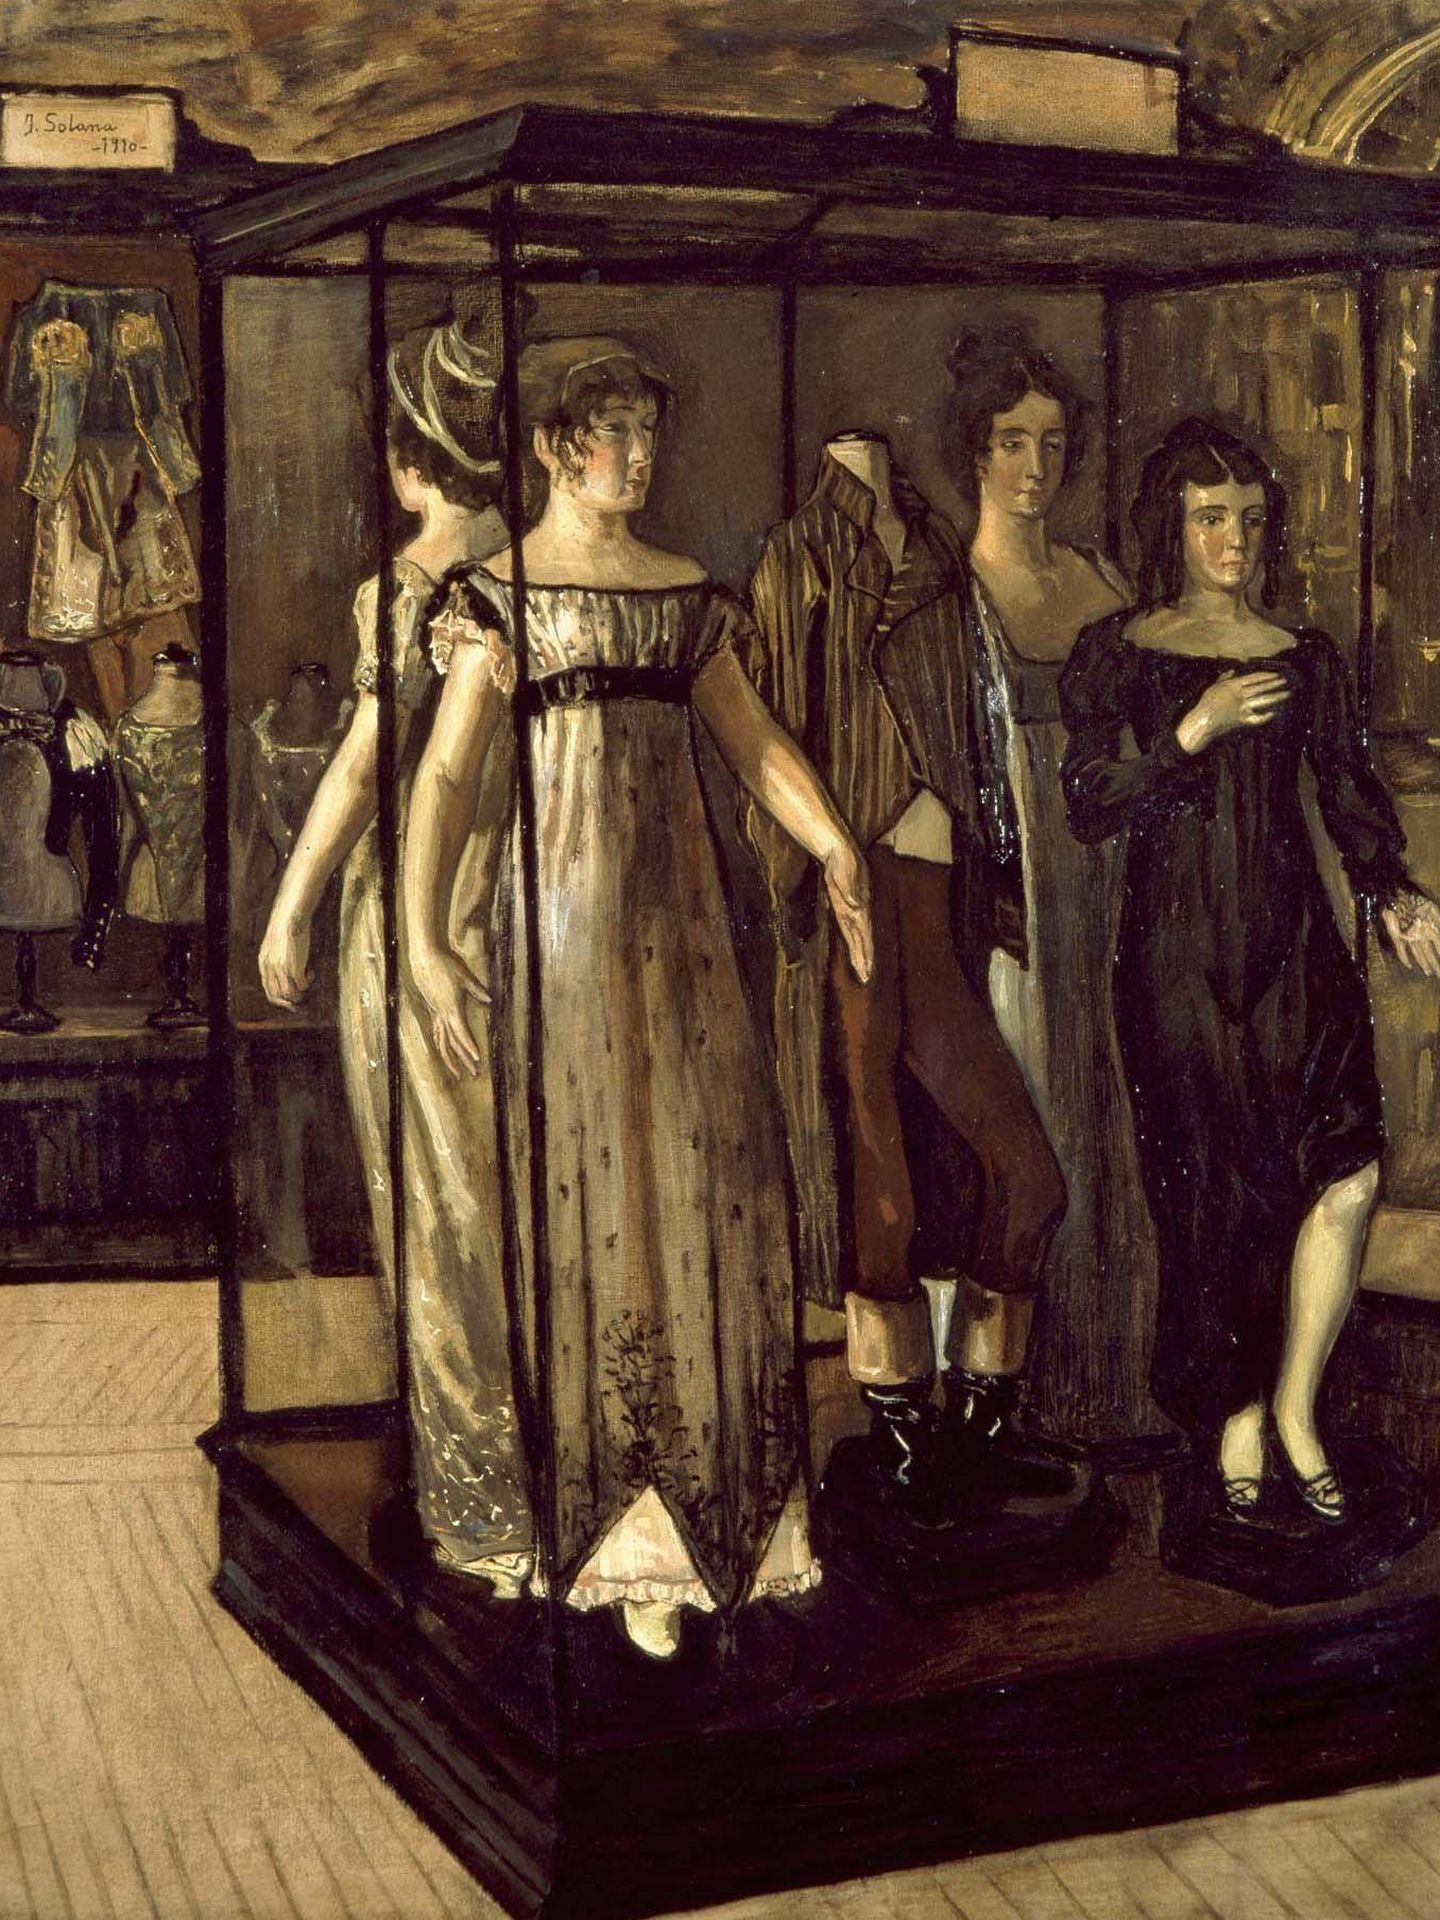 'Las vitrinas', José Gutiérrez Solana, 1910. Museo Nacional Centro de Arte Reina Sofía.